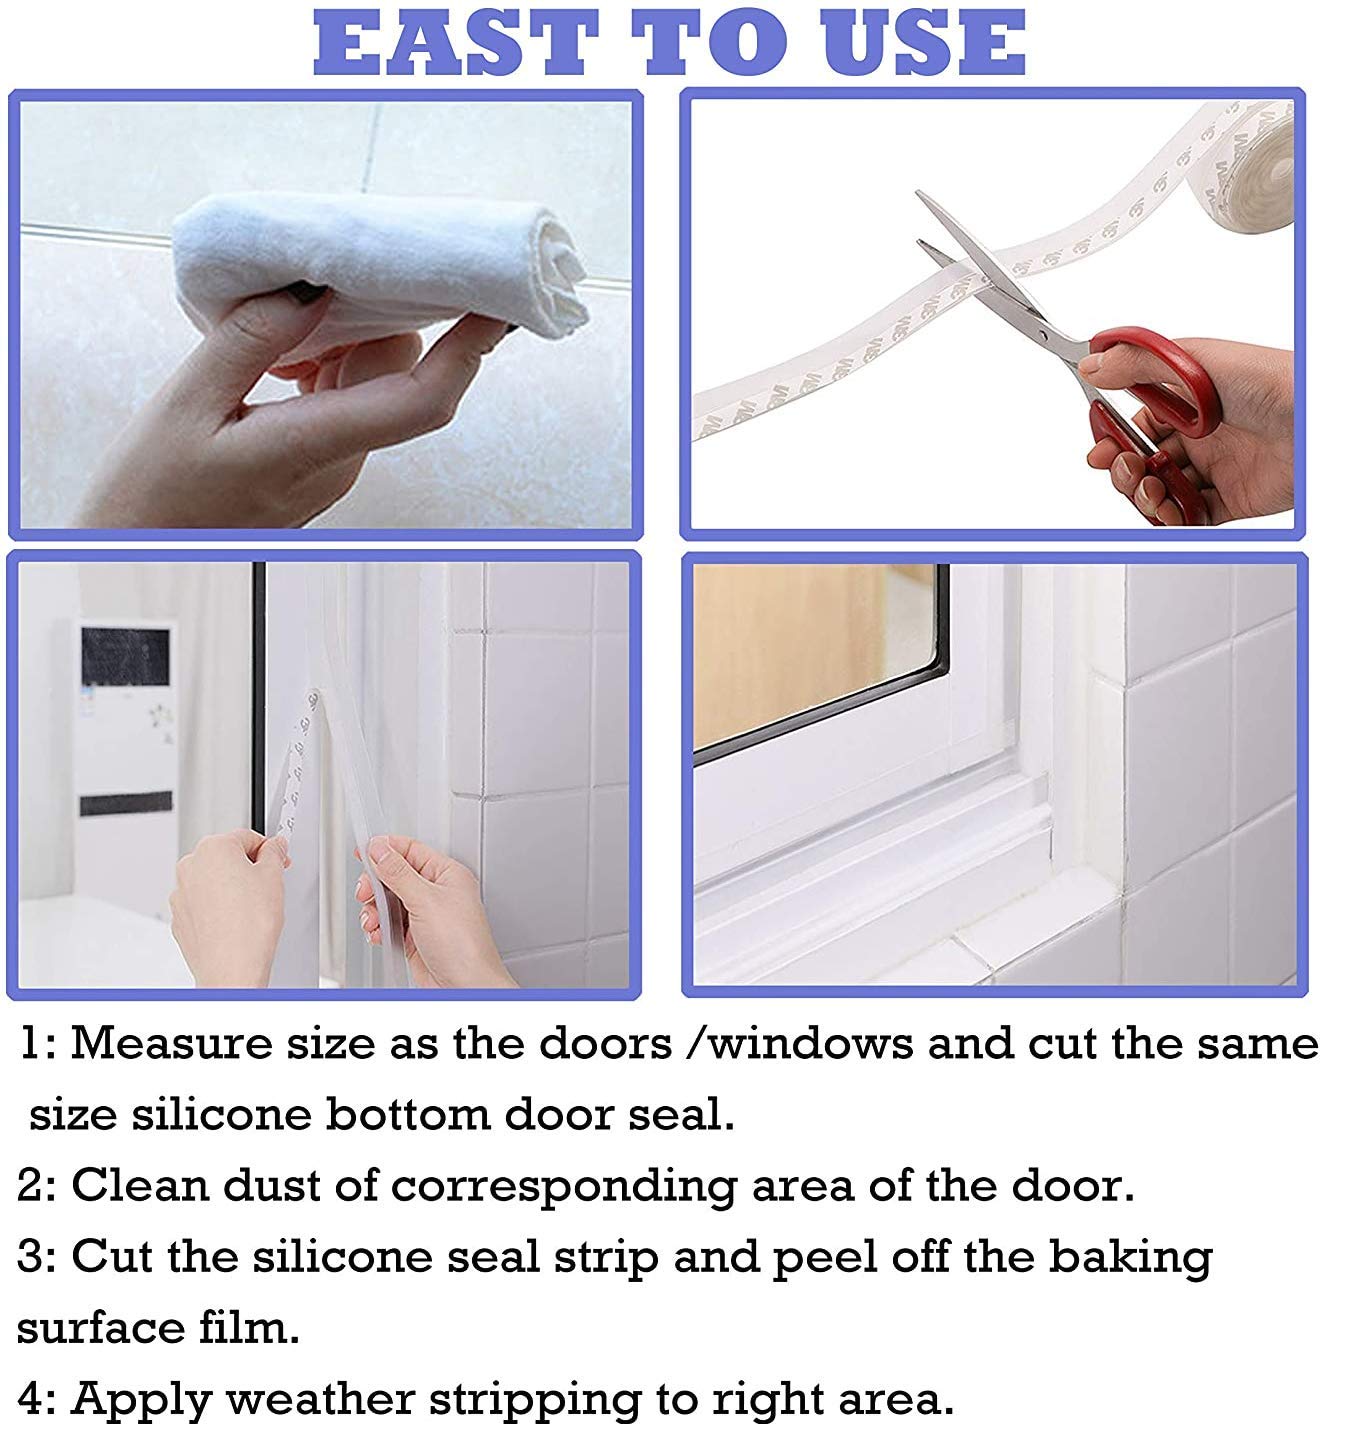 Hukimoyo Door sealing strip for home, Self-Adhesive window silicone seal strips weather stripping door tape for seal, Door gap sealer - 1 Pc (1 Meter, 25 mm)